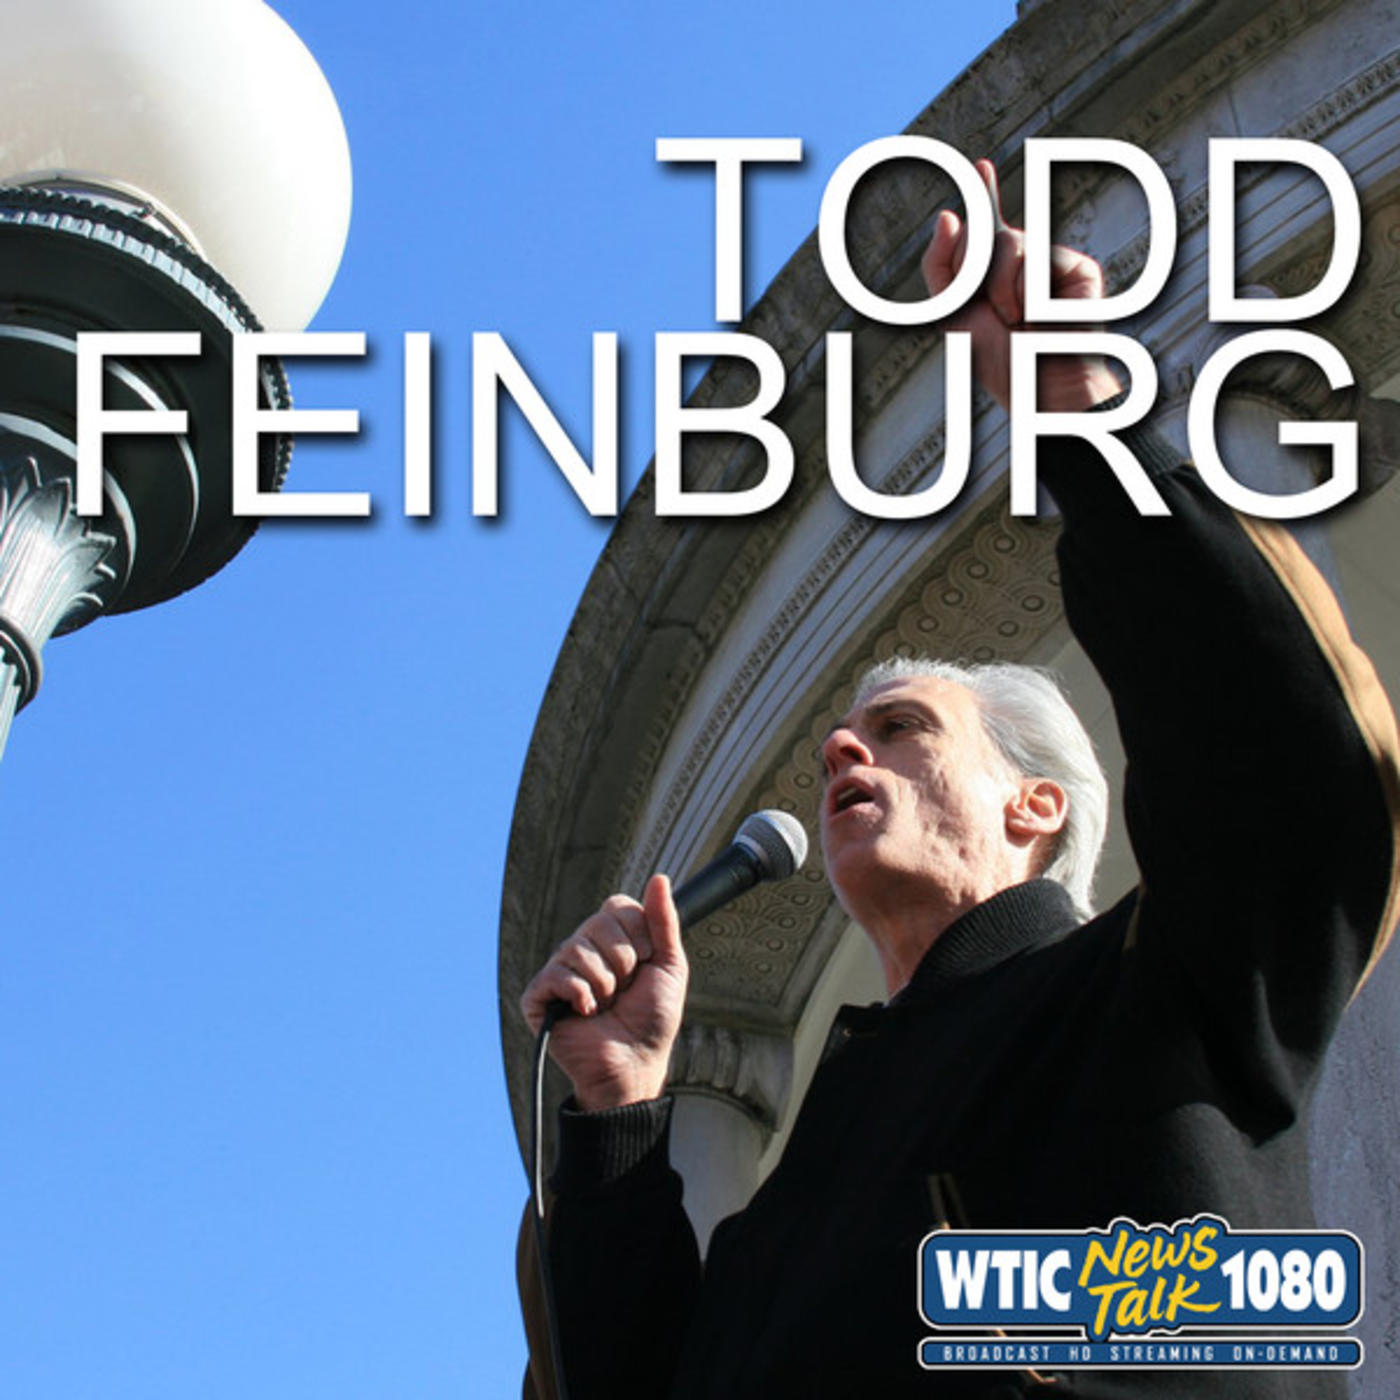 Todd Feinburg: SCOTUS Update with Steve Gilles (03/10/20)